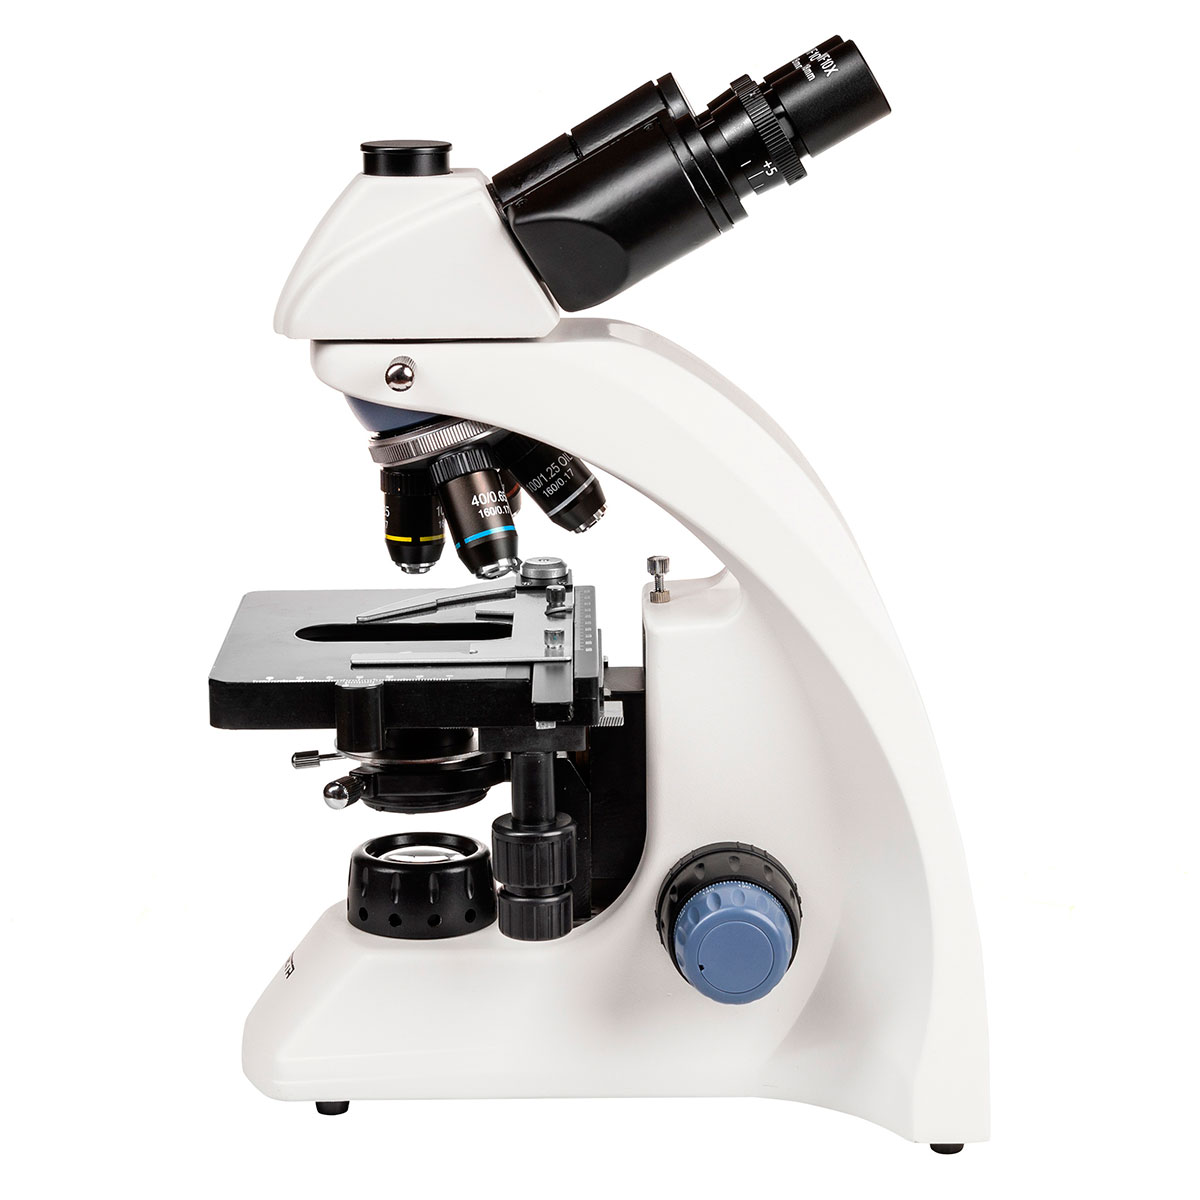 Микроскоп SIGETA MB-304 40x-1600x LED Trino